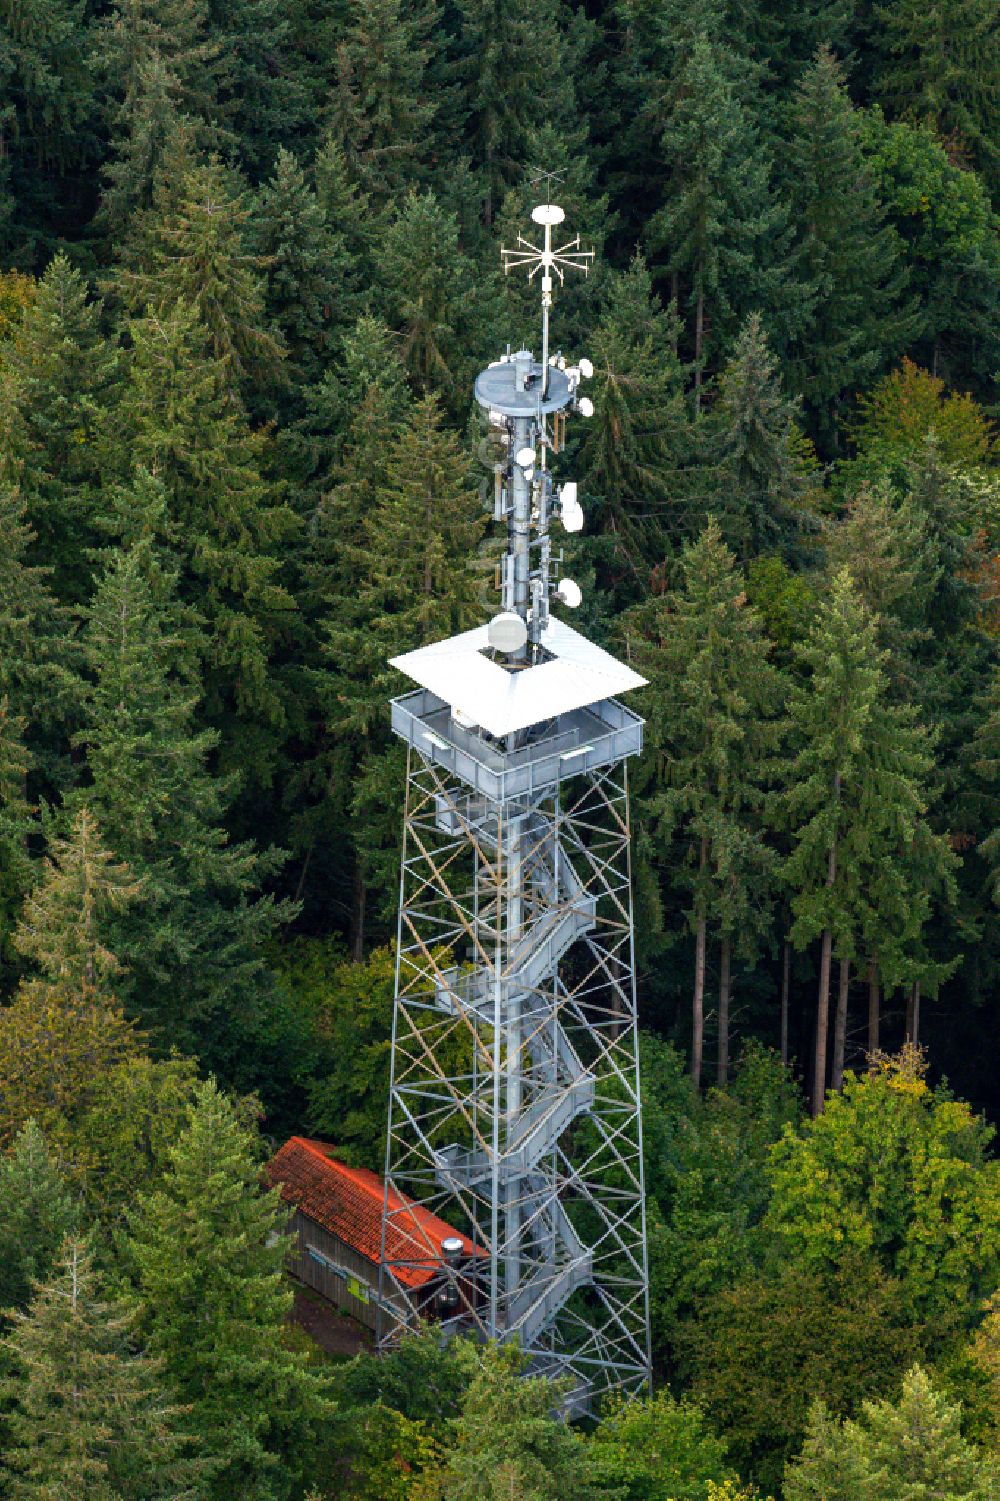 Aerial image Eichstetten am Kaiserstuhl - Structure of the observation tower Eichelspitzturm in Eichstetten am Kaiserstuhl in the state Baden-Wurttemberg, Germany